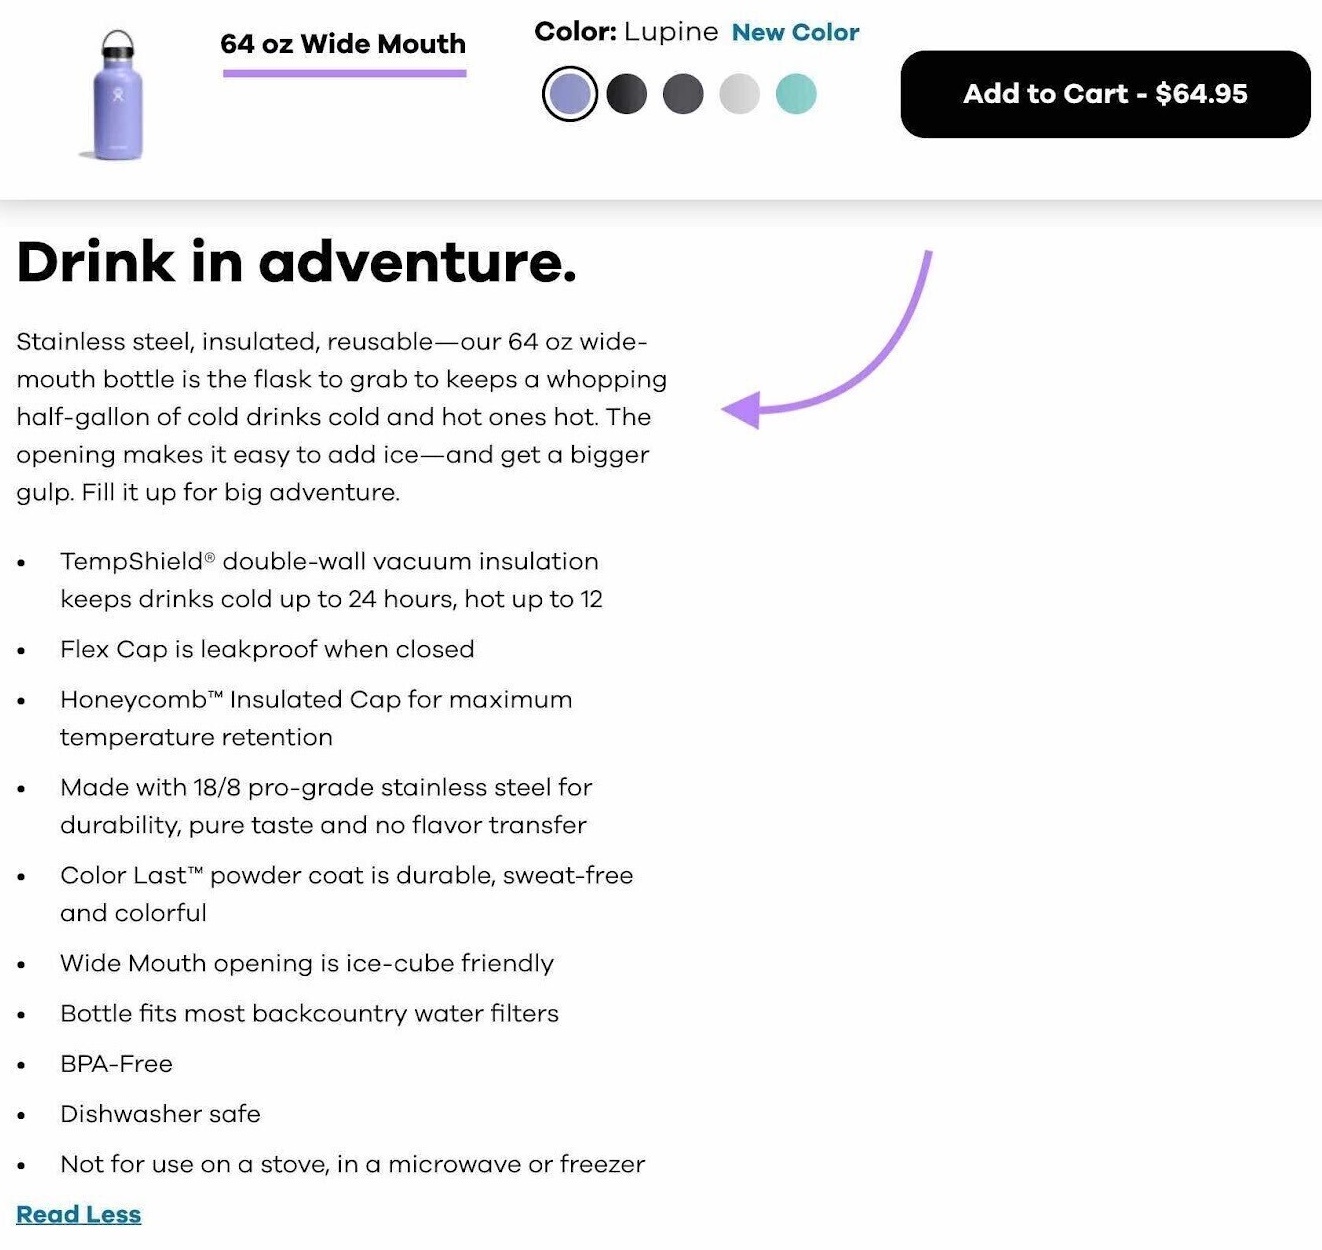 A product description for "64 oz Wide Mouth" water bottle